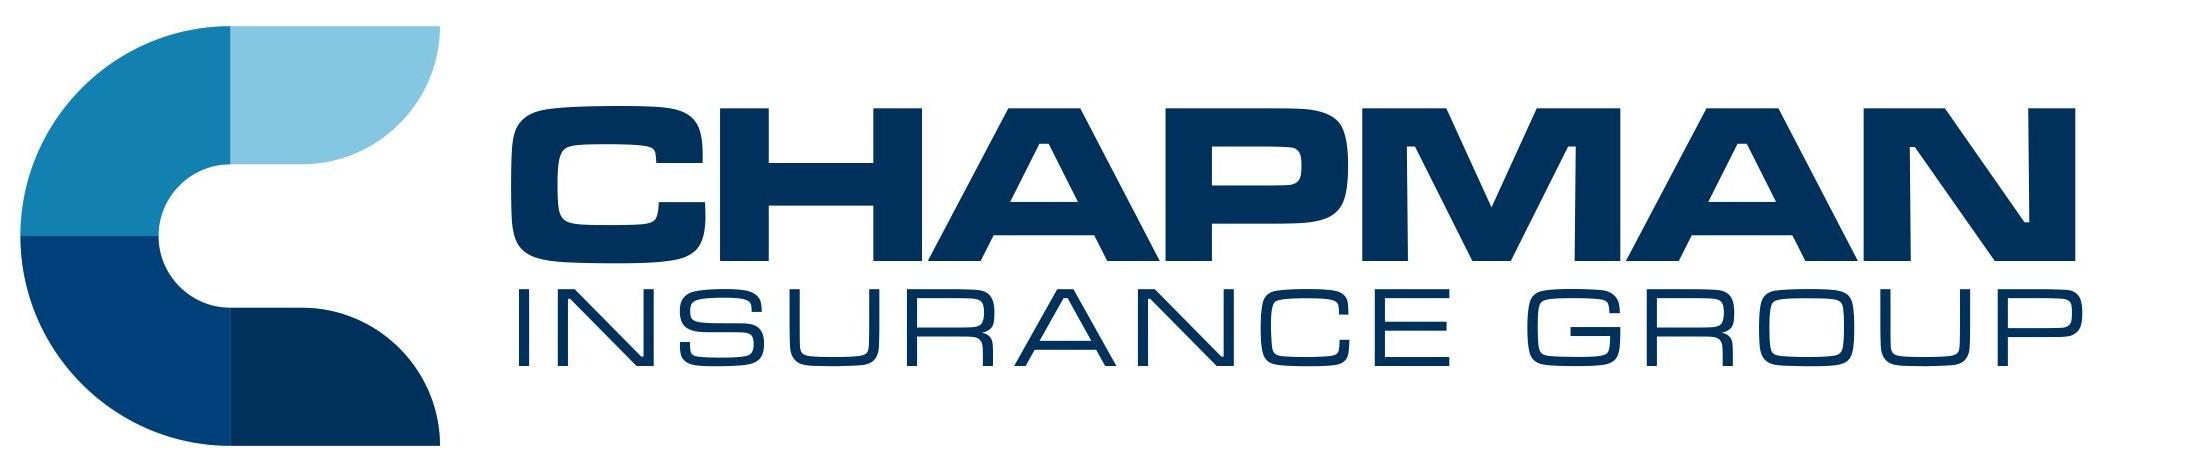 Chapman insurance.jpg